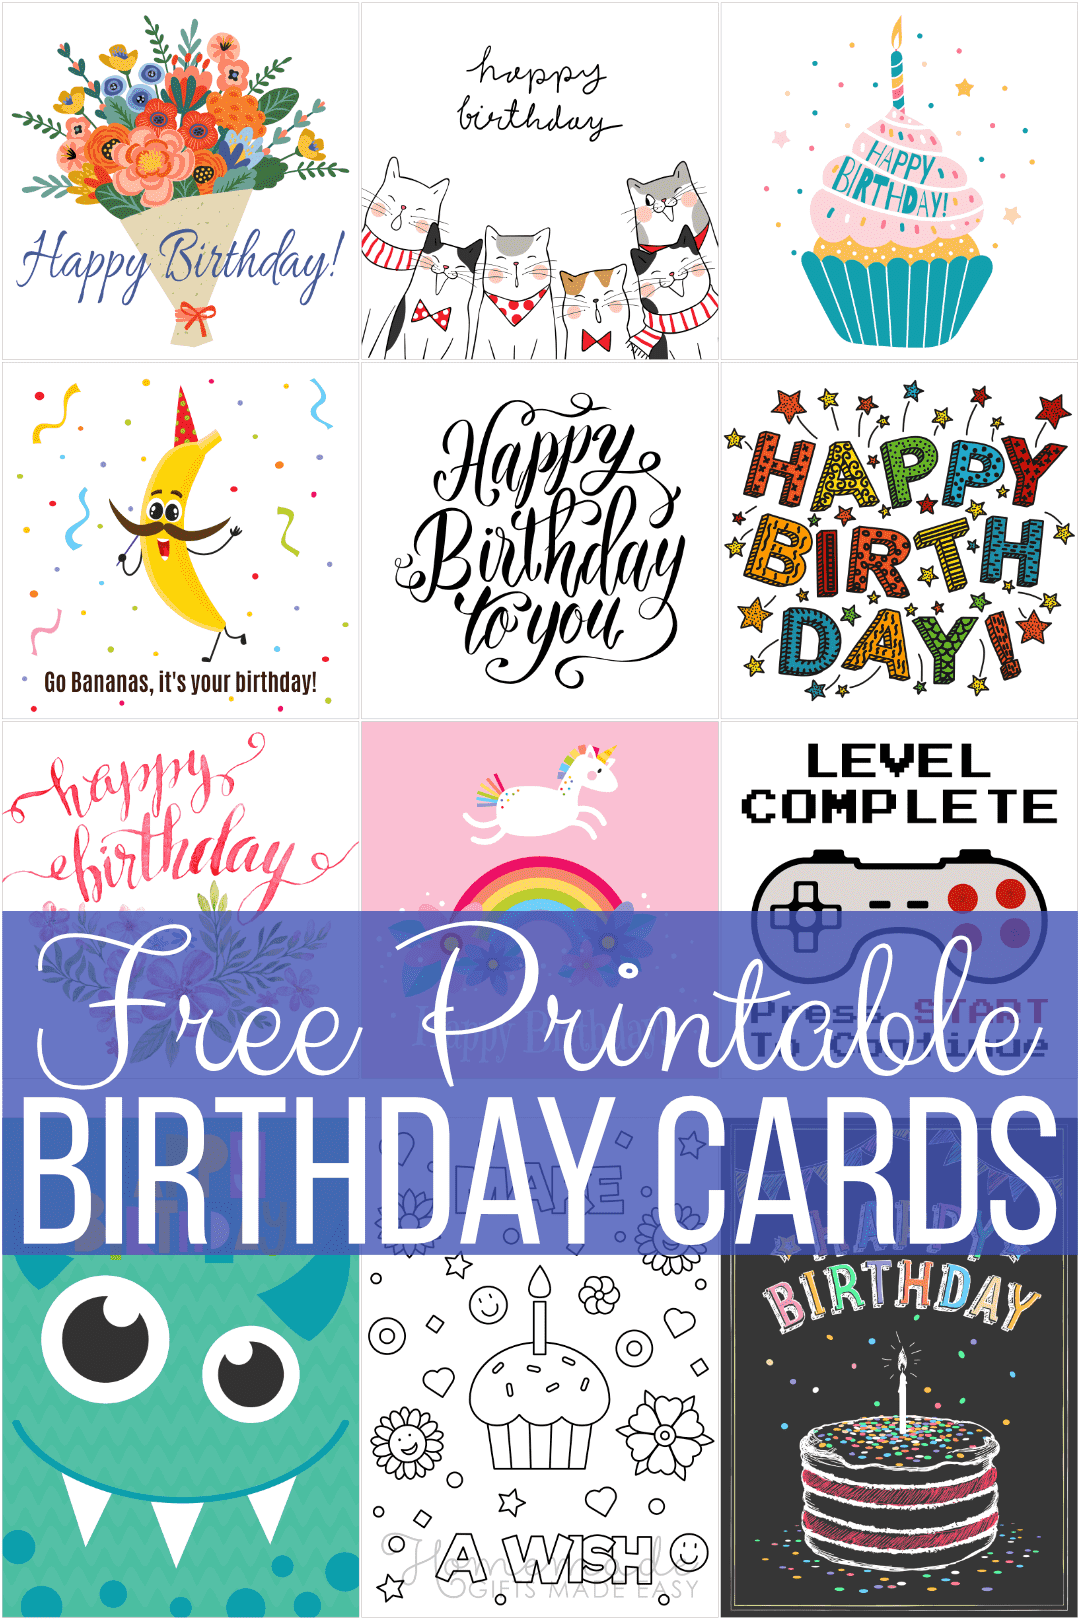 Digital Birthday Card Printable Birthday Card Birthday Card for Her